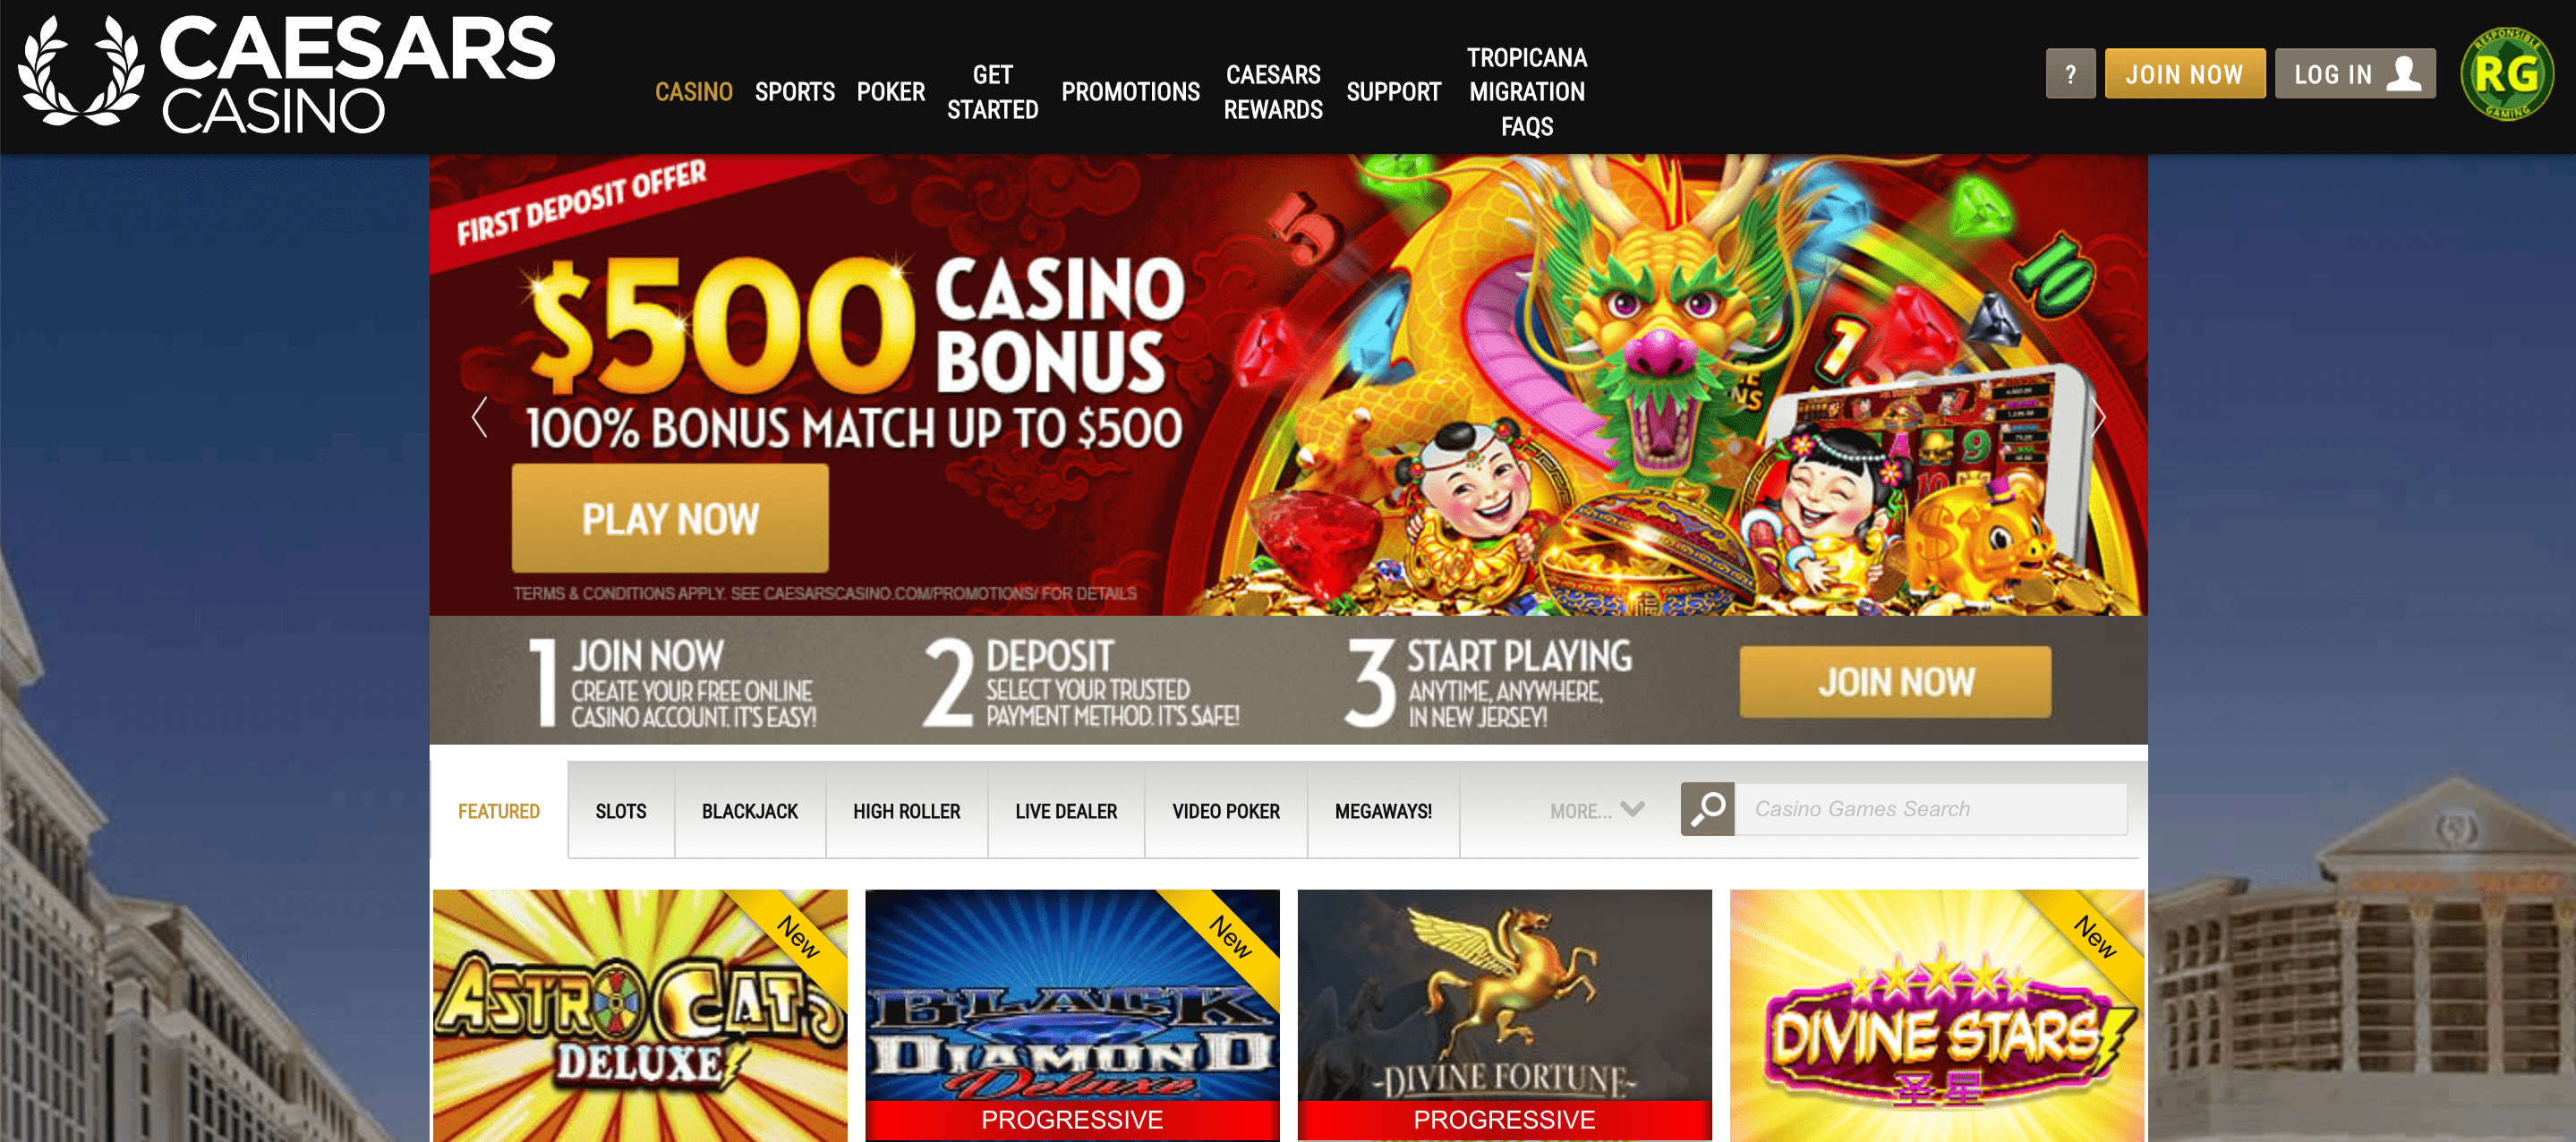 Caesars Casino NJ Home Page